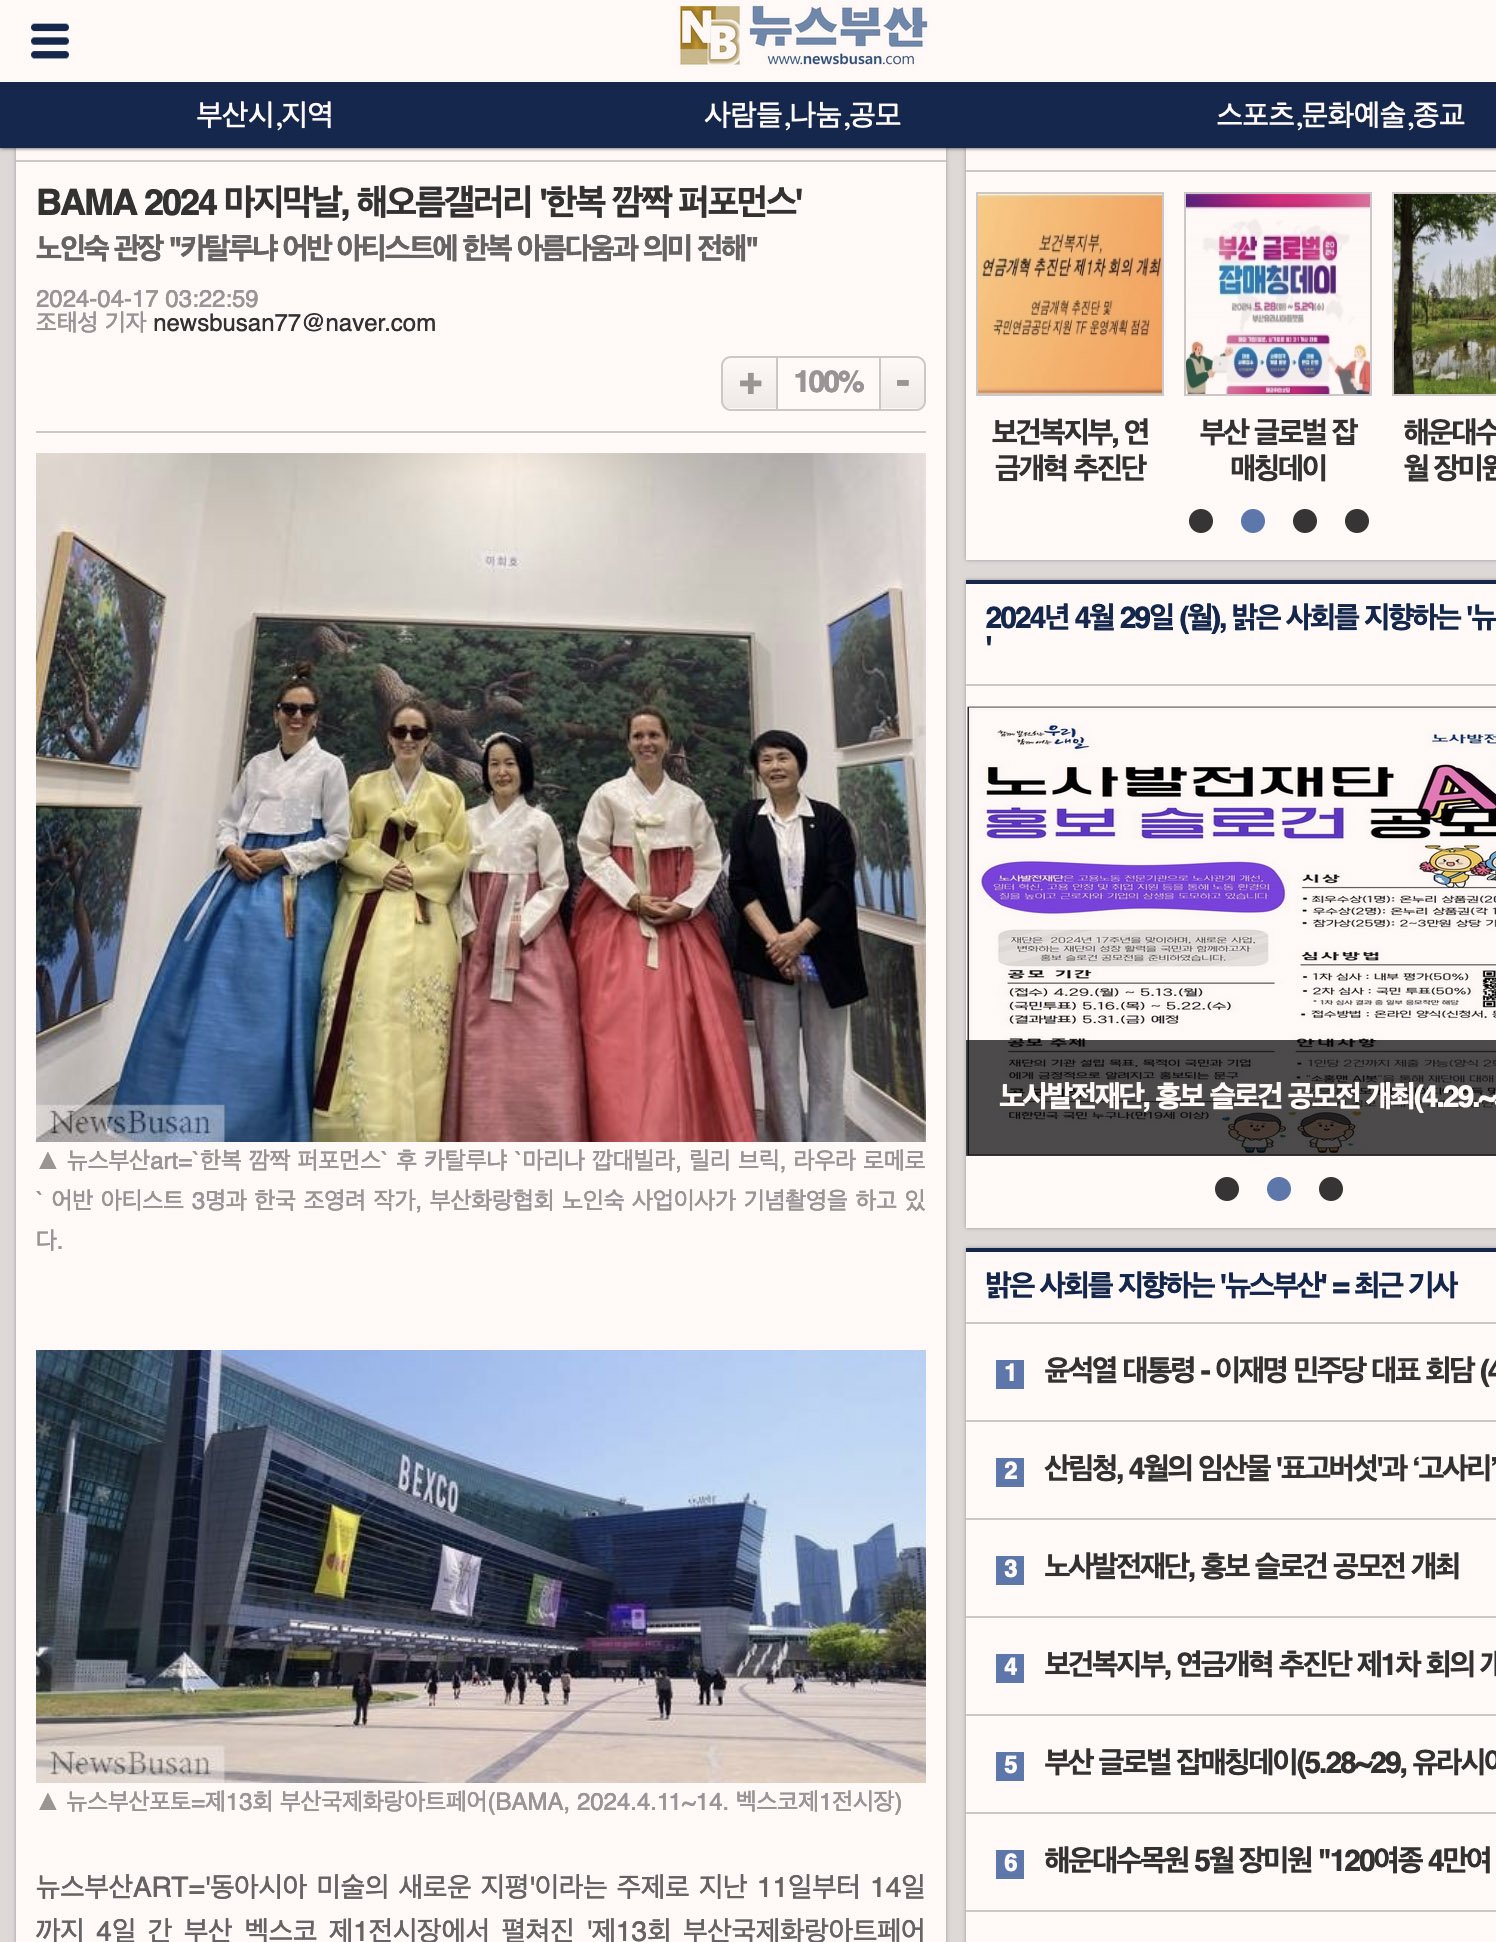 korea news 4.jpg